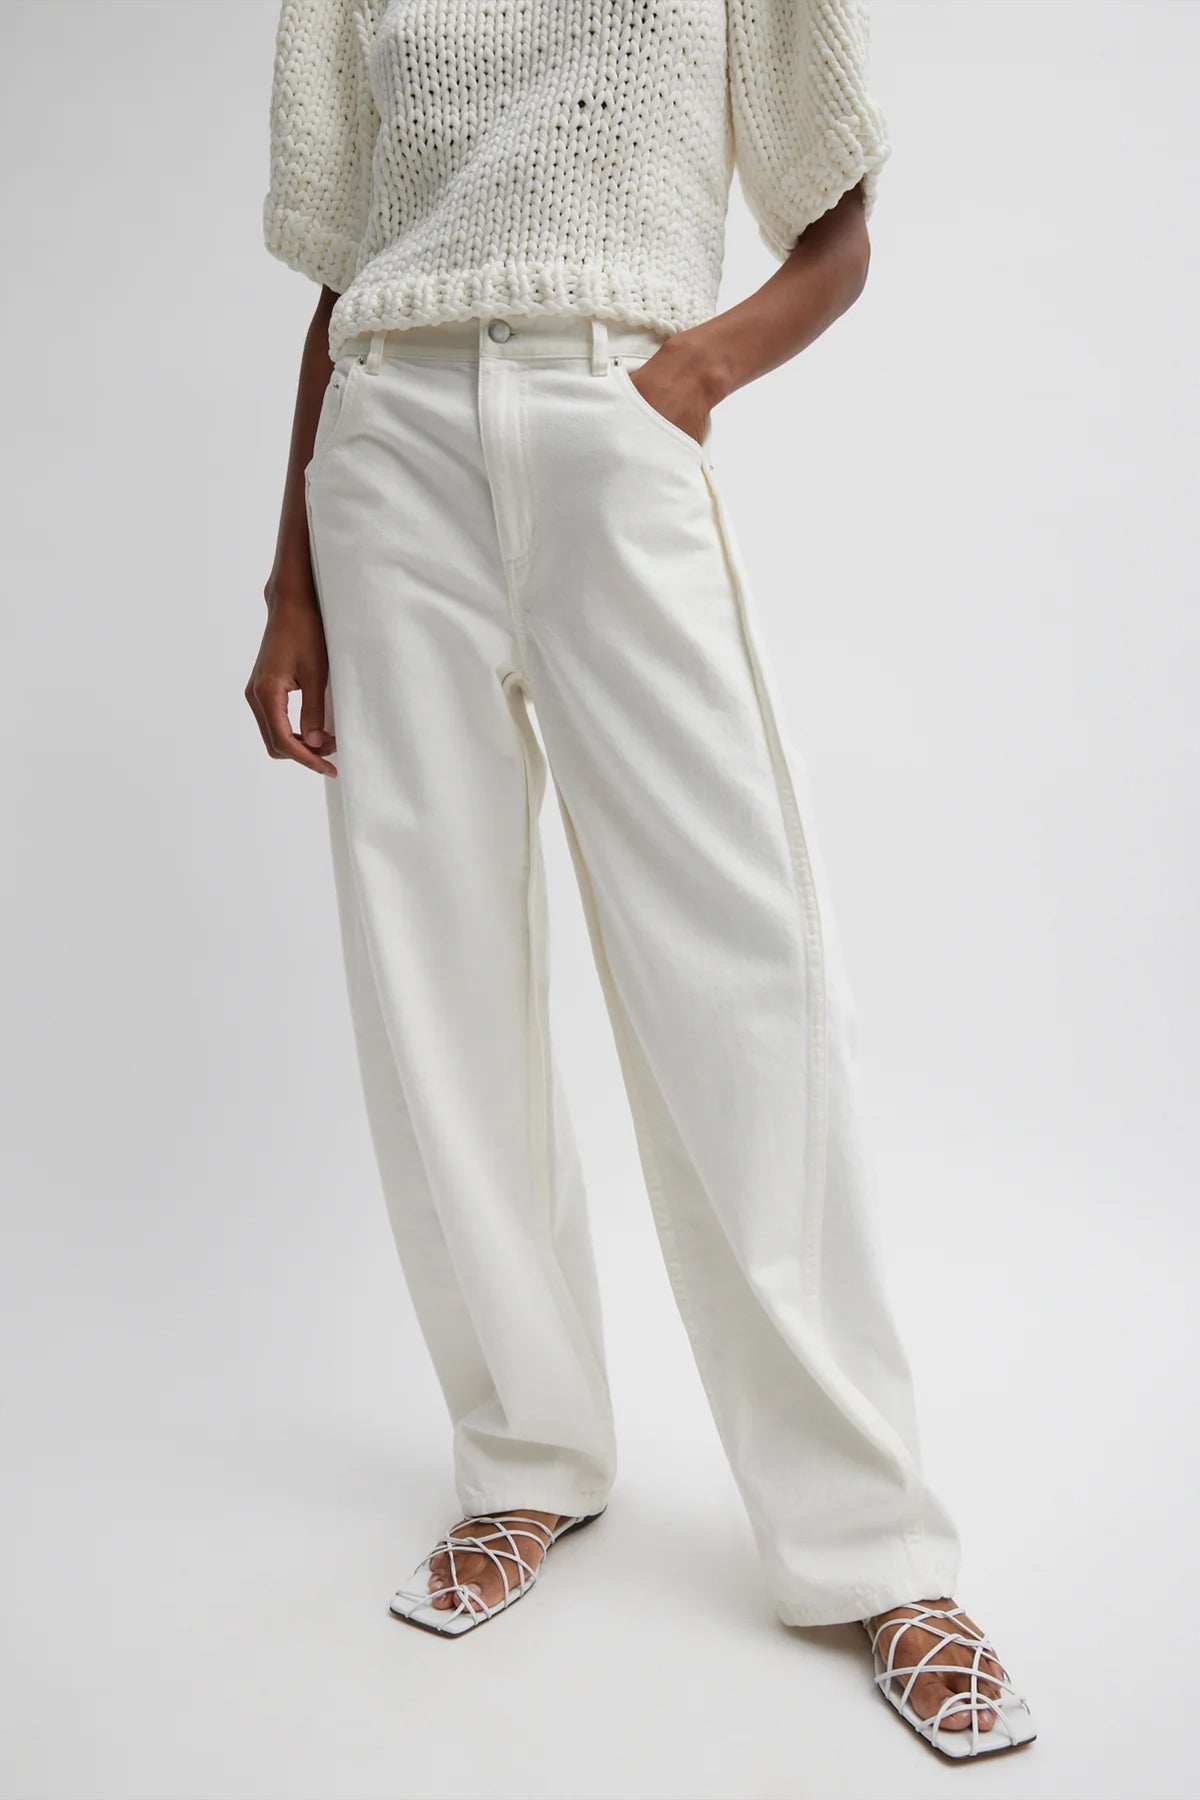 Spring Denim Tuck Jean (Regular) in White - shop-olivia.com